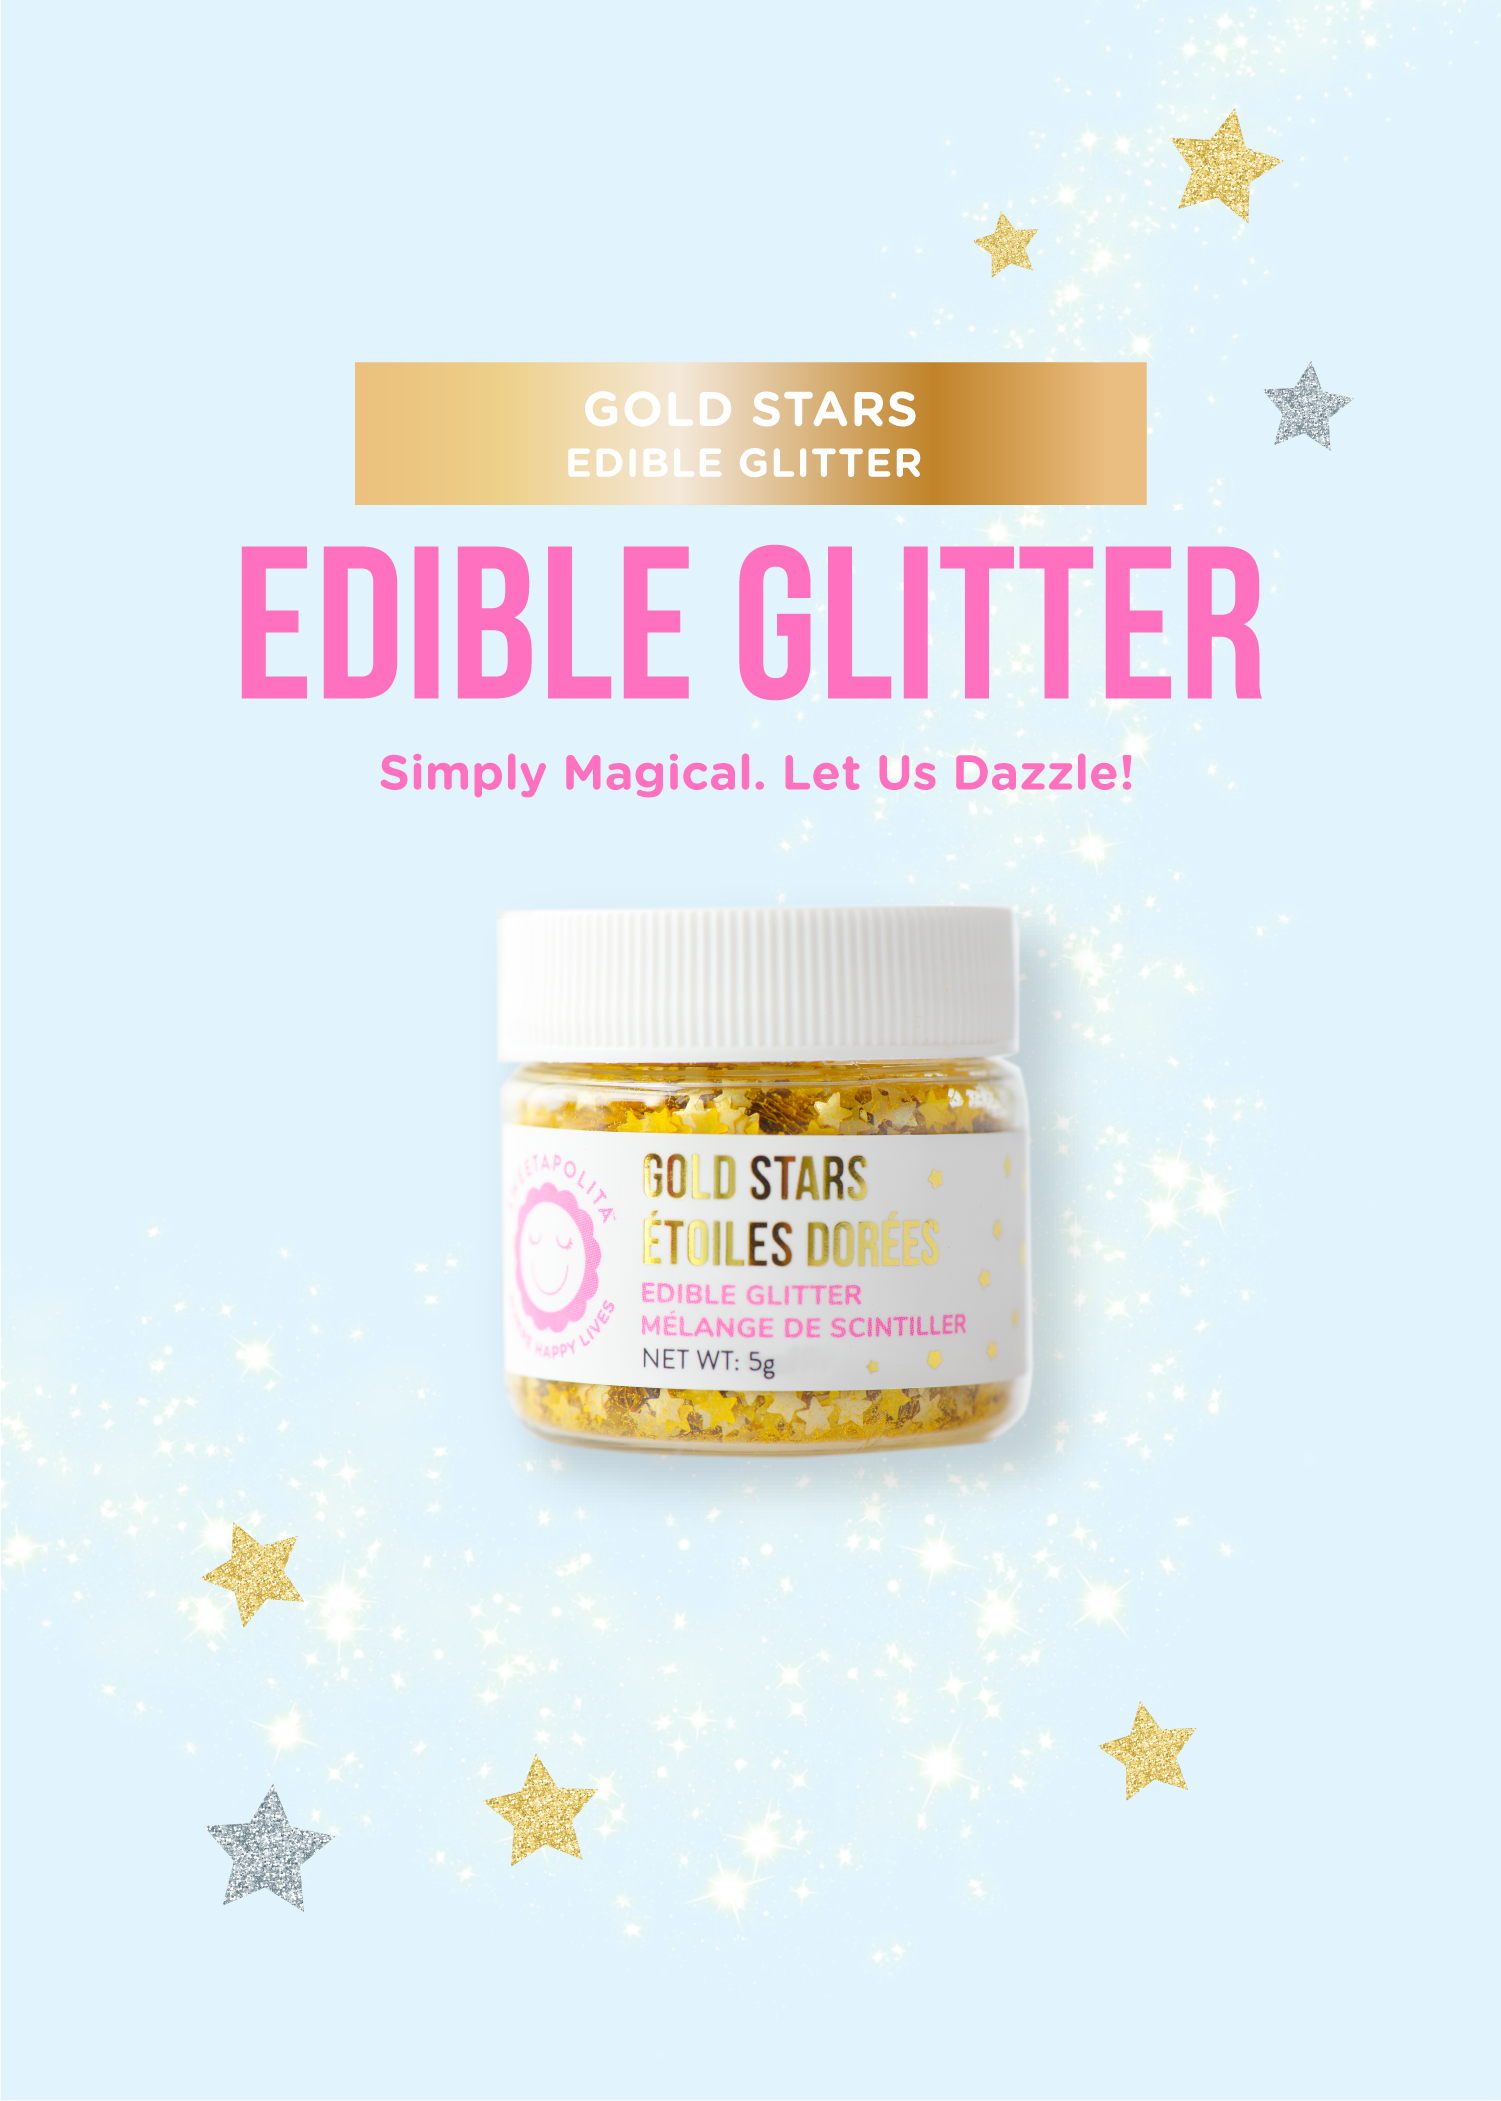 Gold Glitter Stars — Sweet Sticks